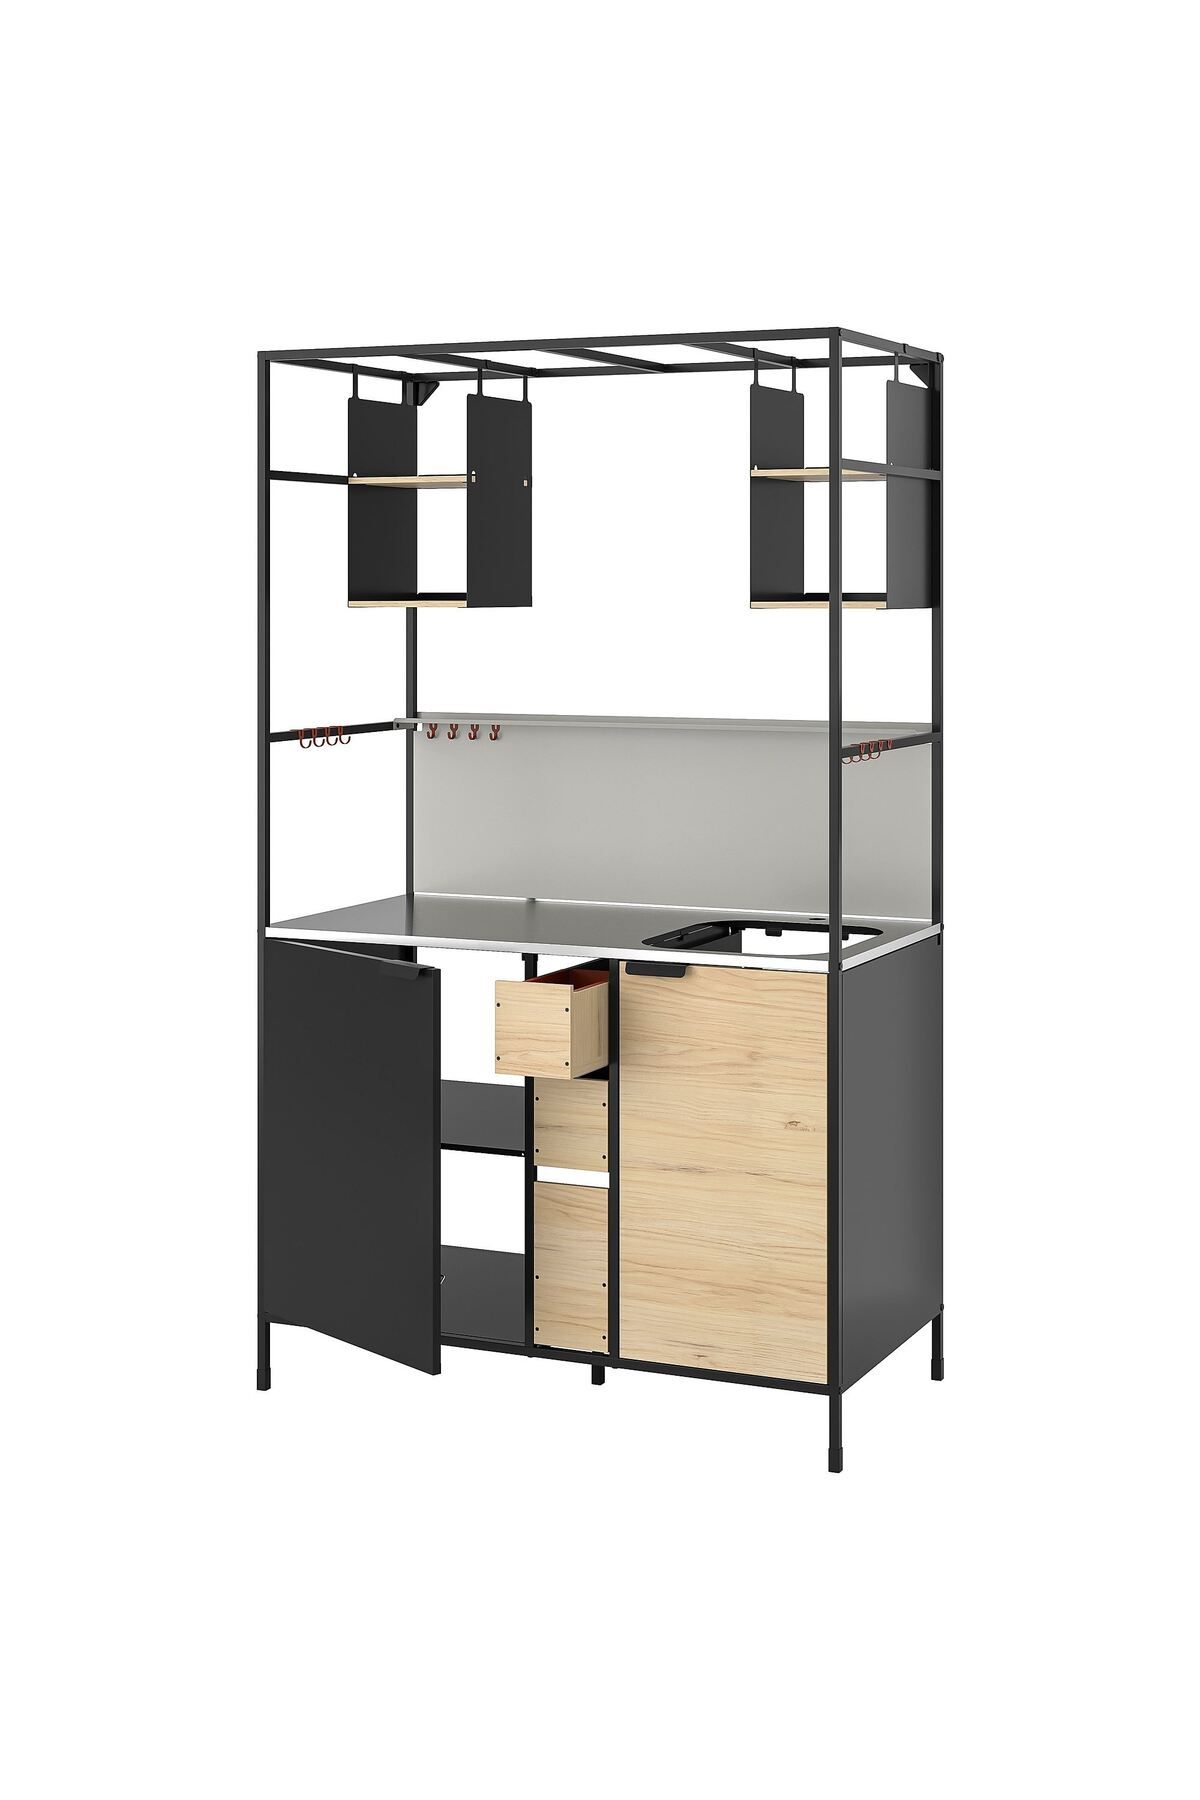 IKEA ÄSPINGE mini mutfak, siyah-dişbudak, 120x60x202 cm